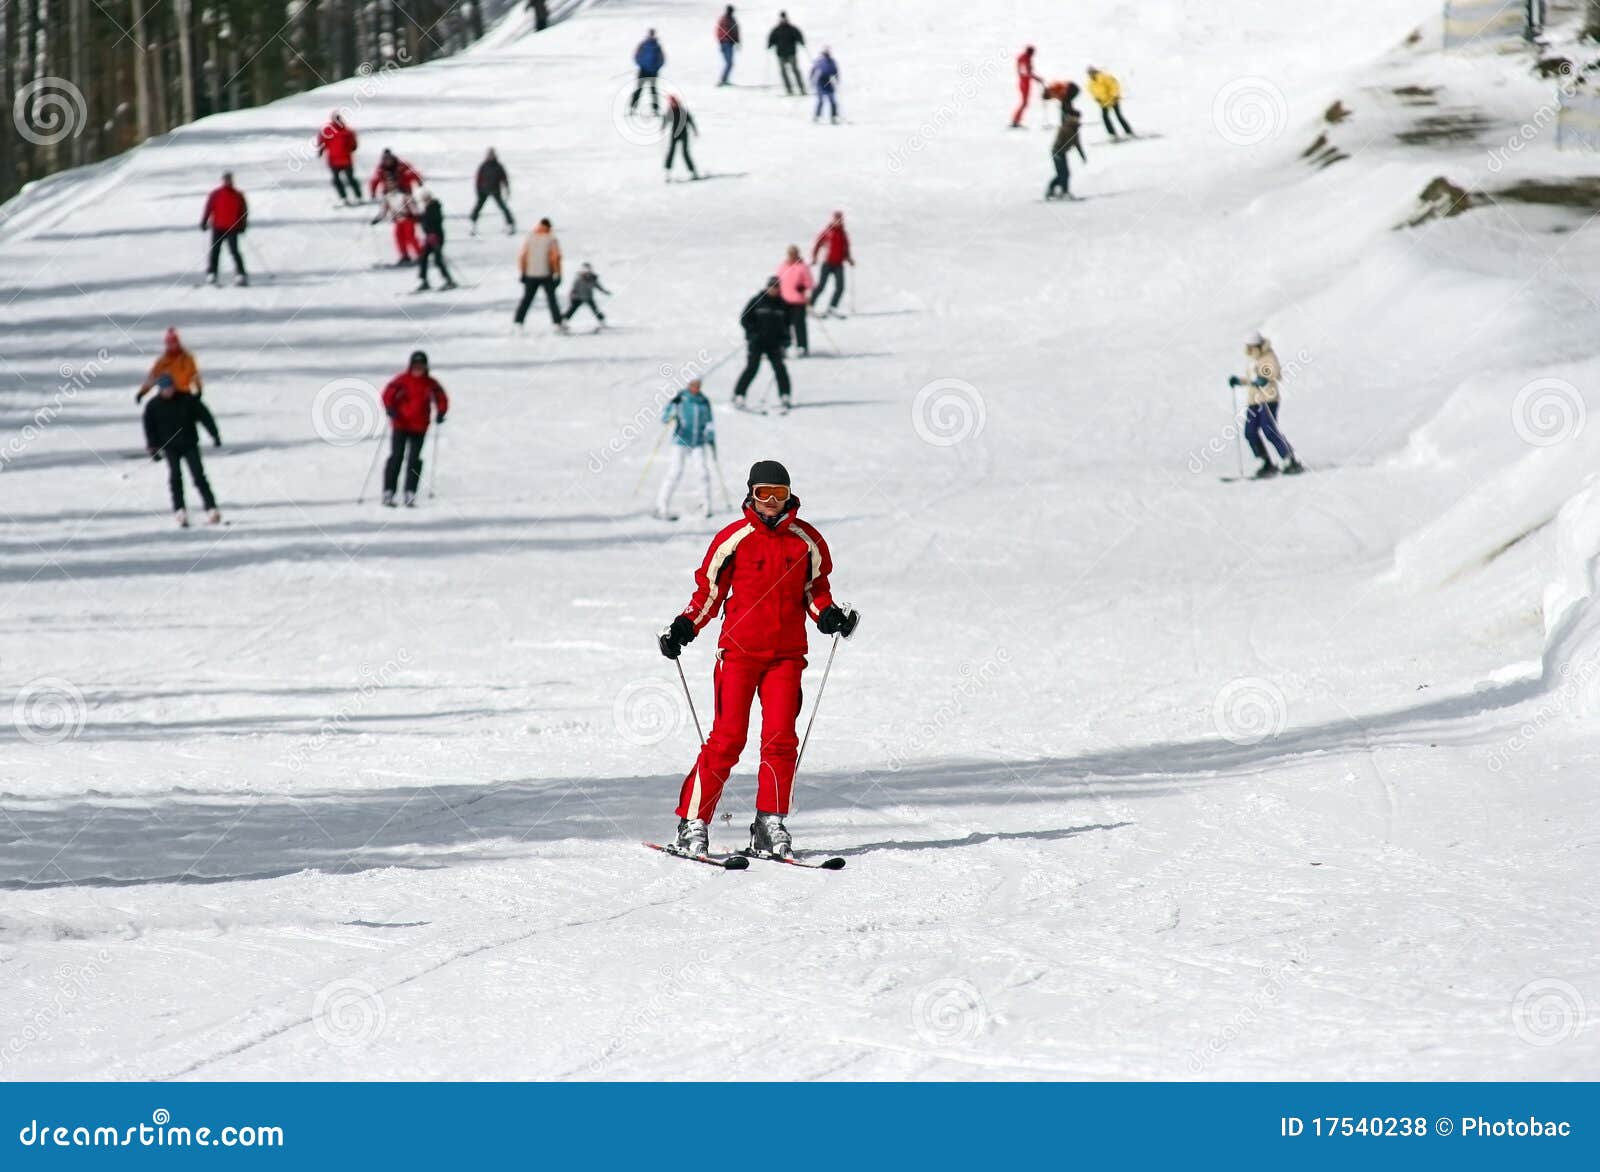 female skier skiing down a piste